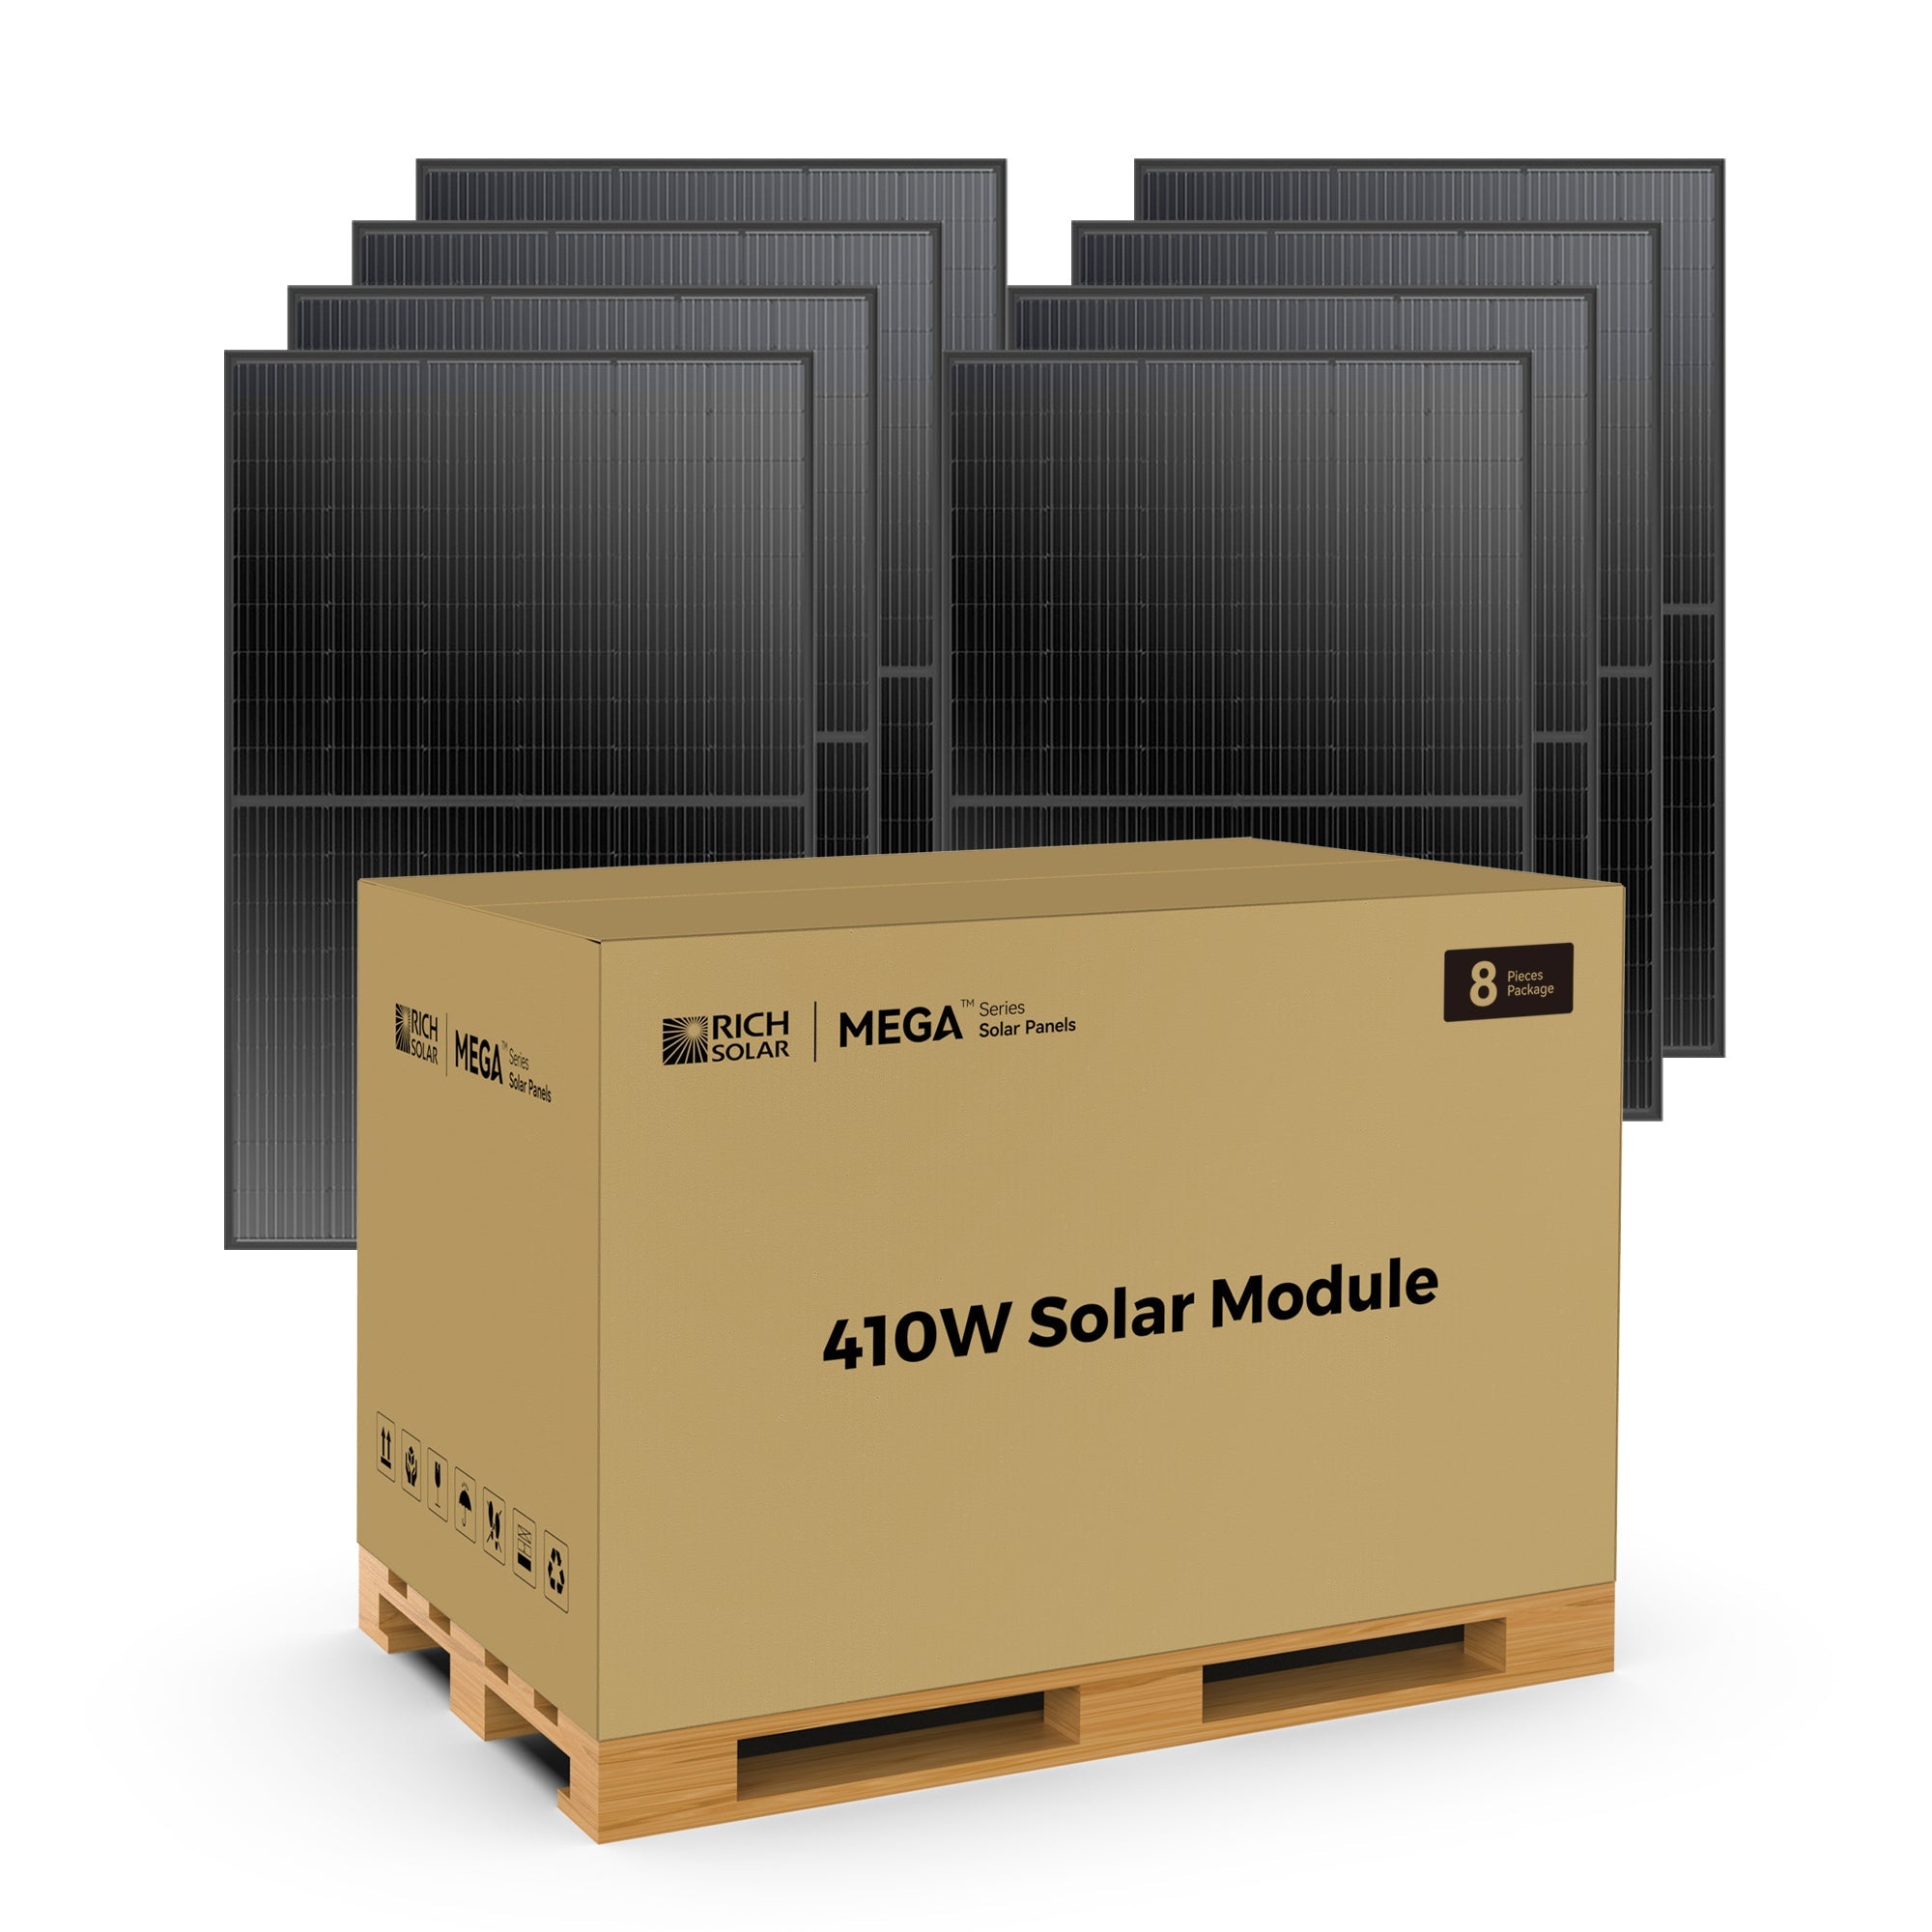 RICH SOLAR MEGA 410 Watt Monocrystalline Solar Panel (8pcs) | High Efficiency | Black Mono-facial Module | Grid-Tie | Off-Grid - Solar Generators and Power Stations Plus